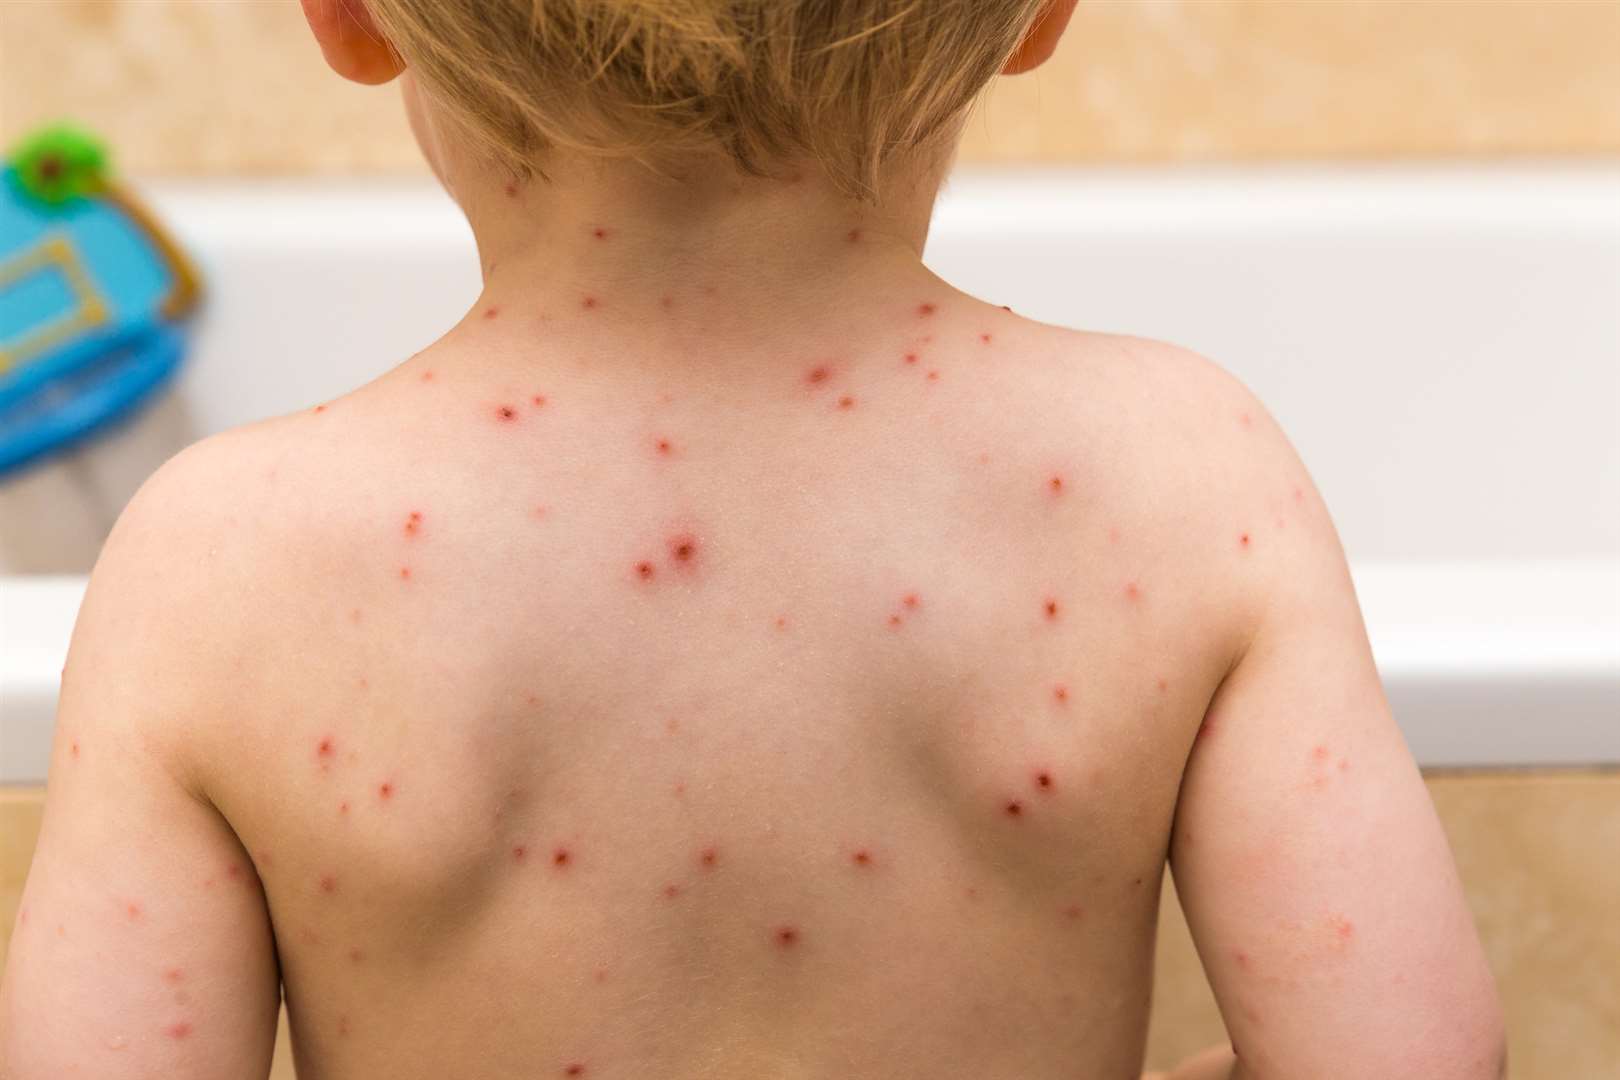 Most children will catch chickenpox at some point